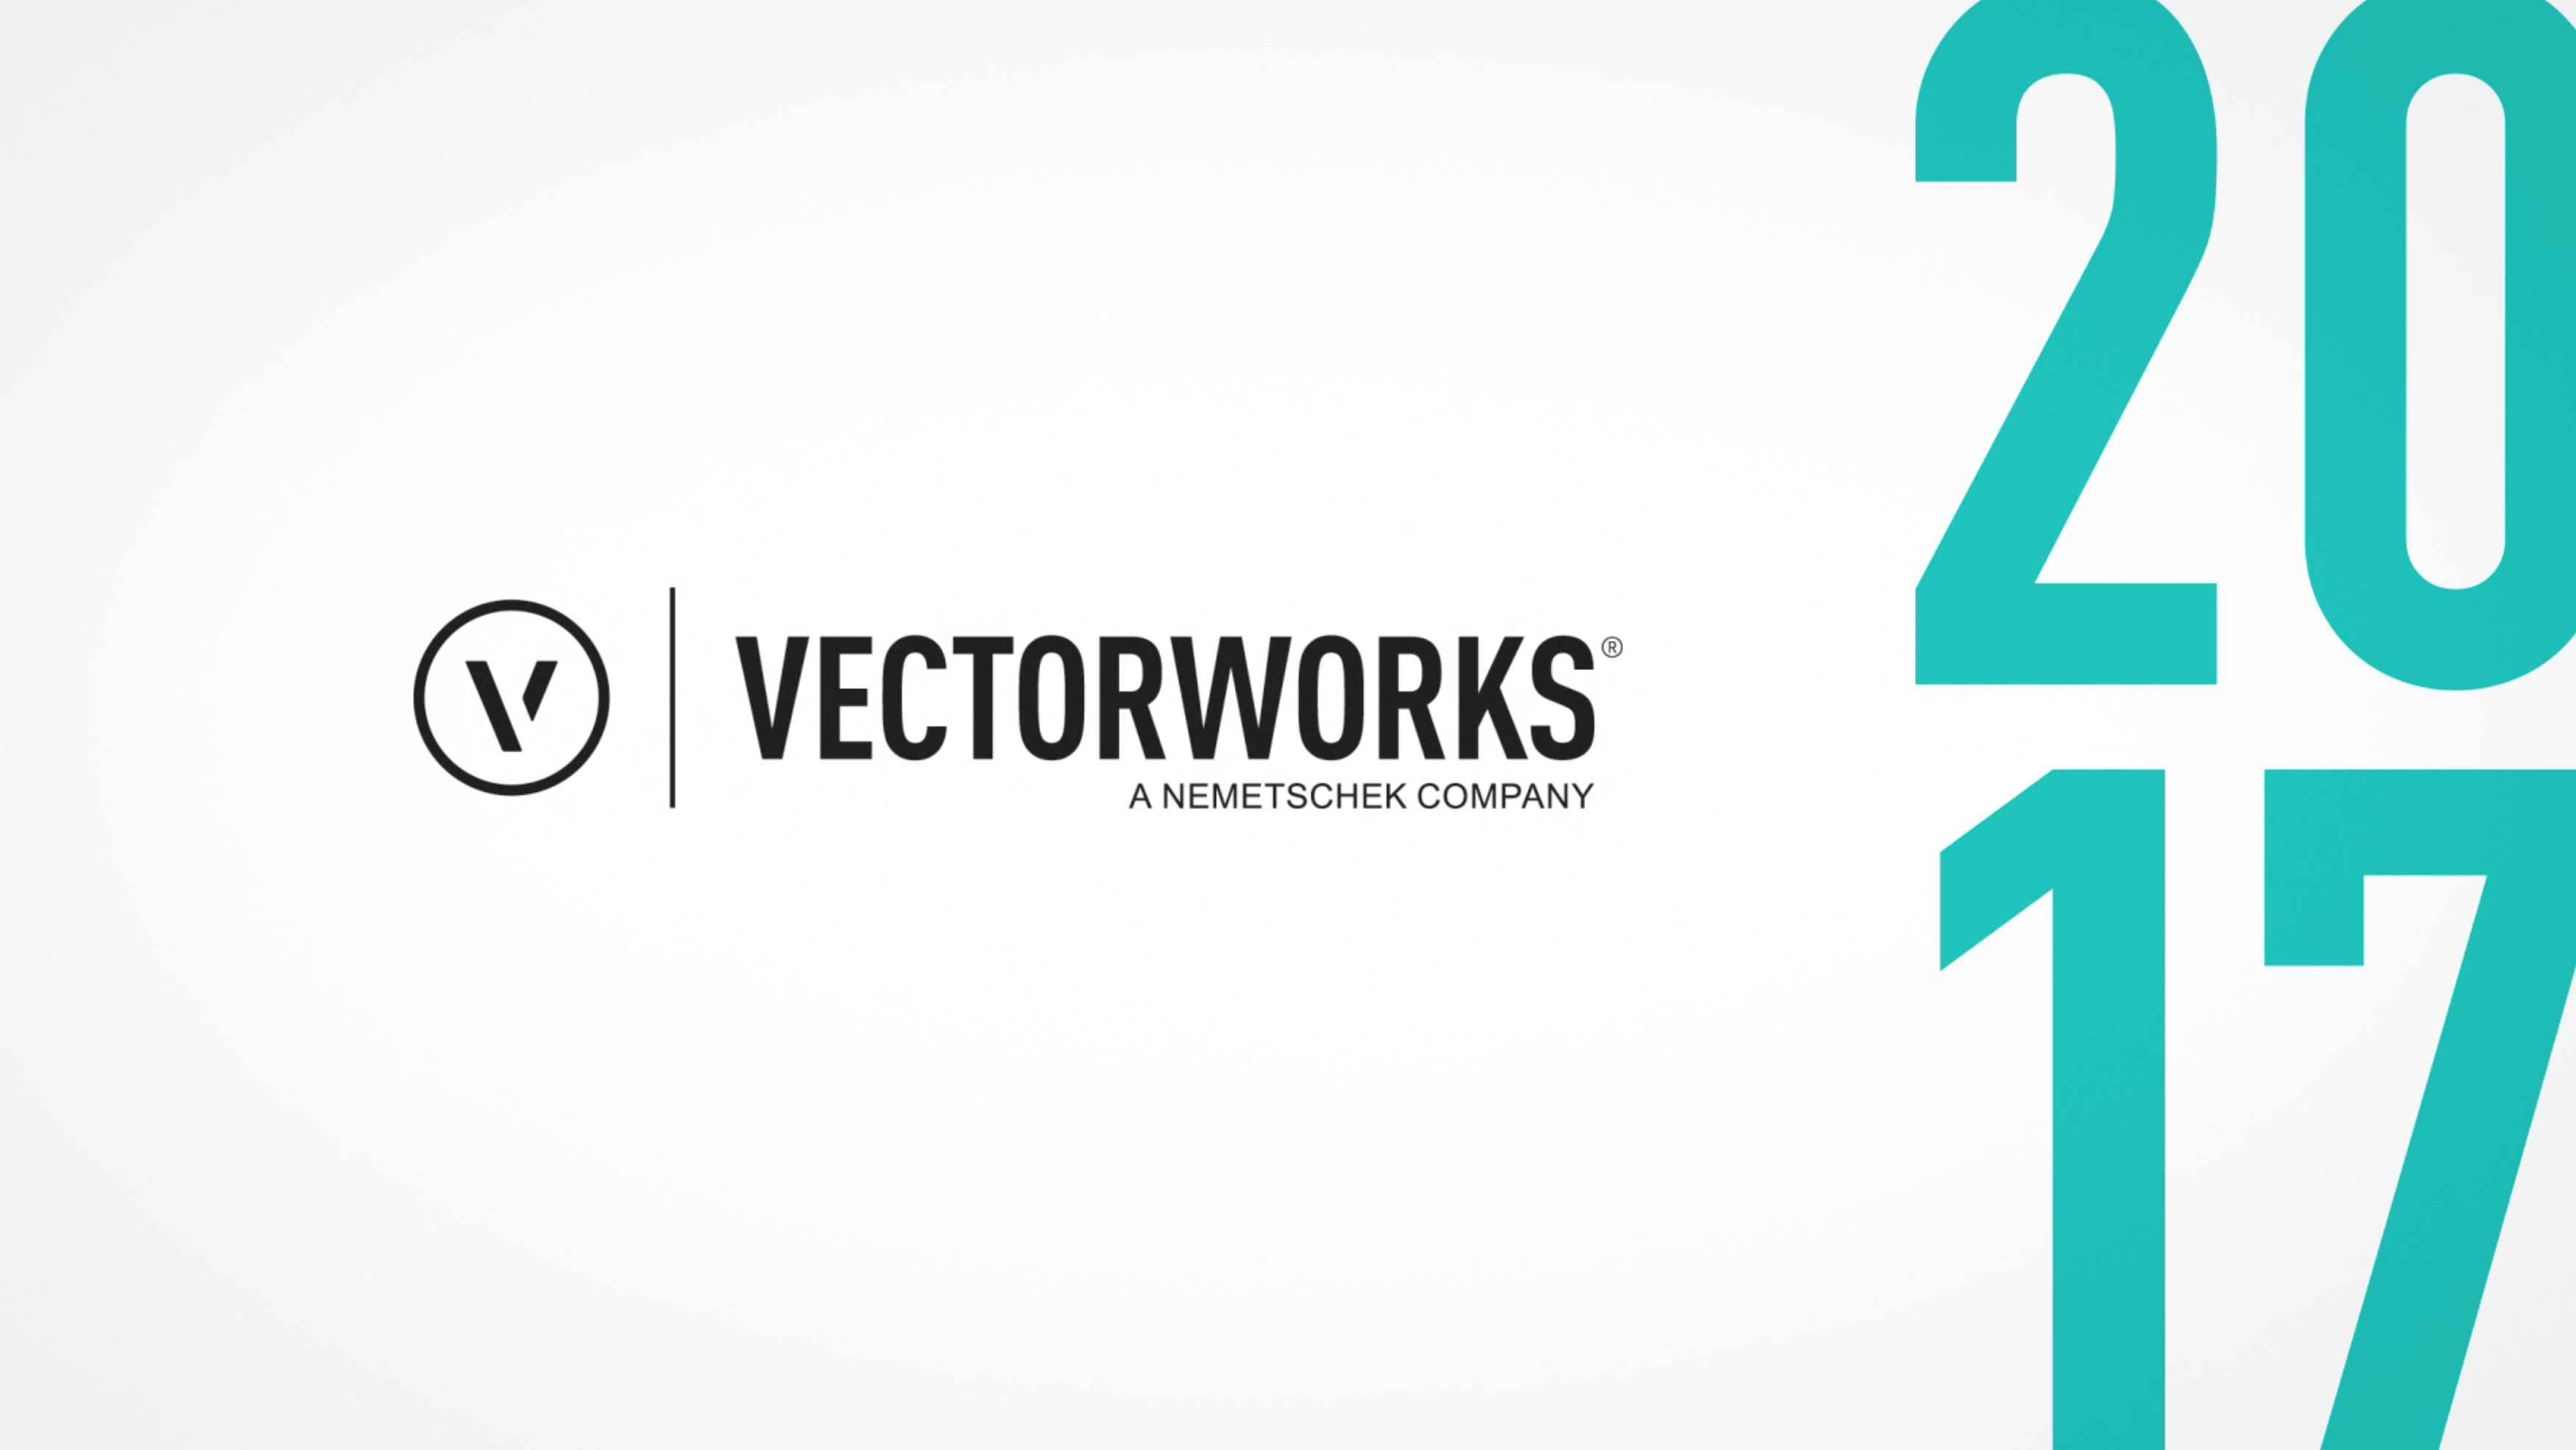 Vectorworks Logo - Vectorworks 2017 Getting Started Guides | Online Training | Vectorworks